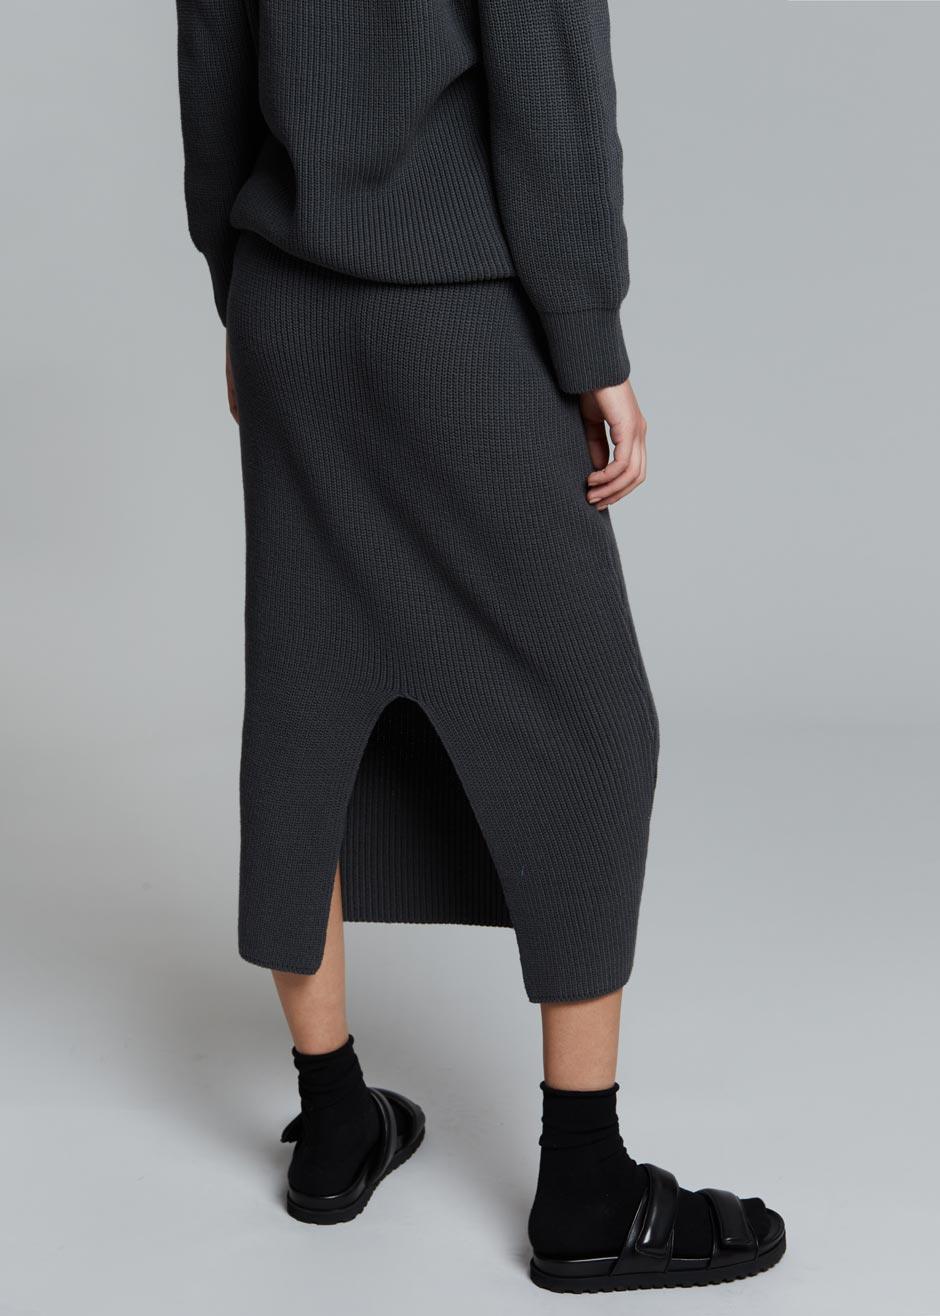 Juni Rib Knit Midi Skirt in Asphalt – The Frankie Shop